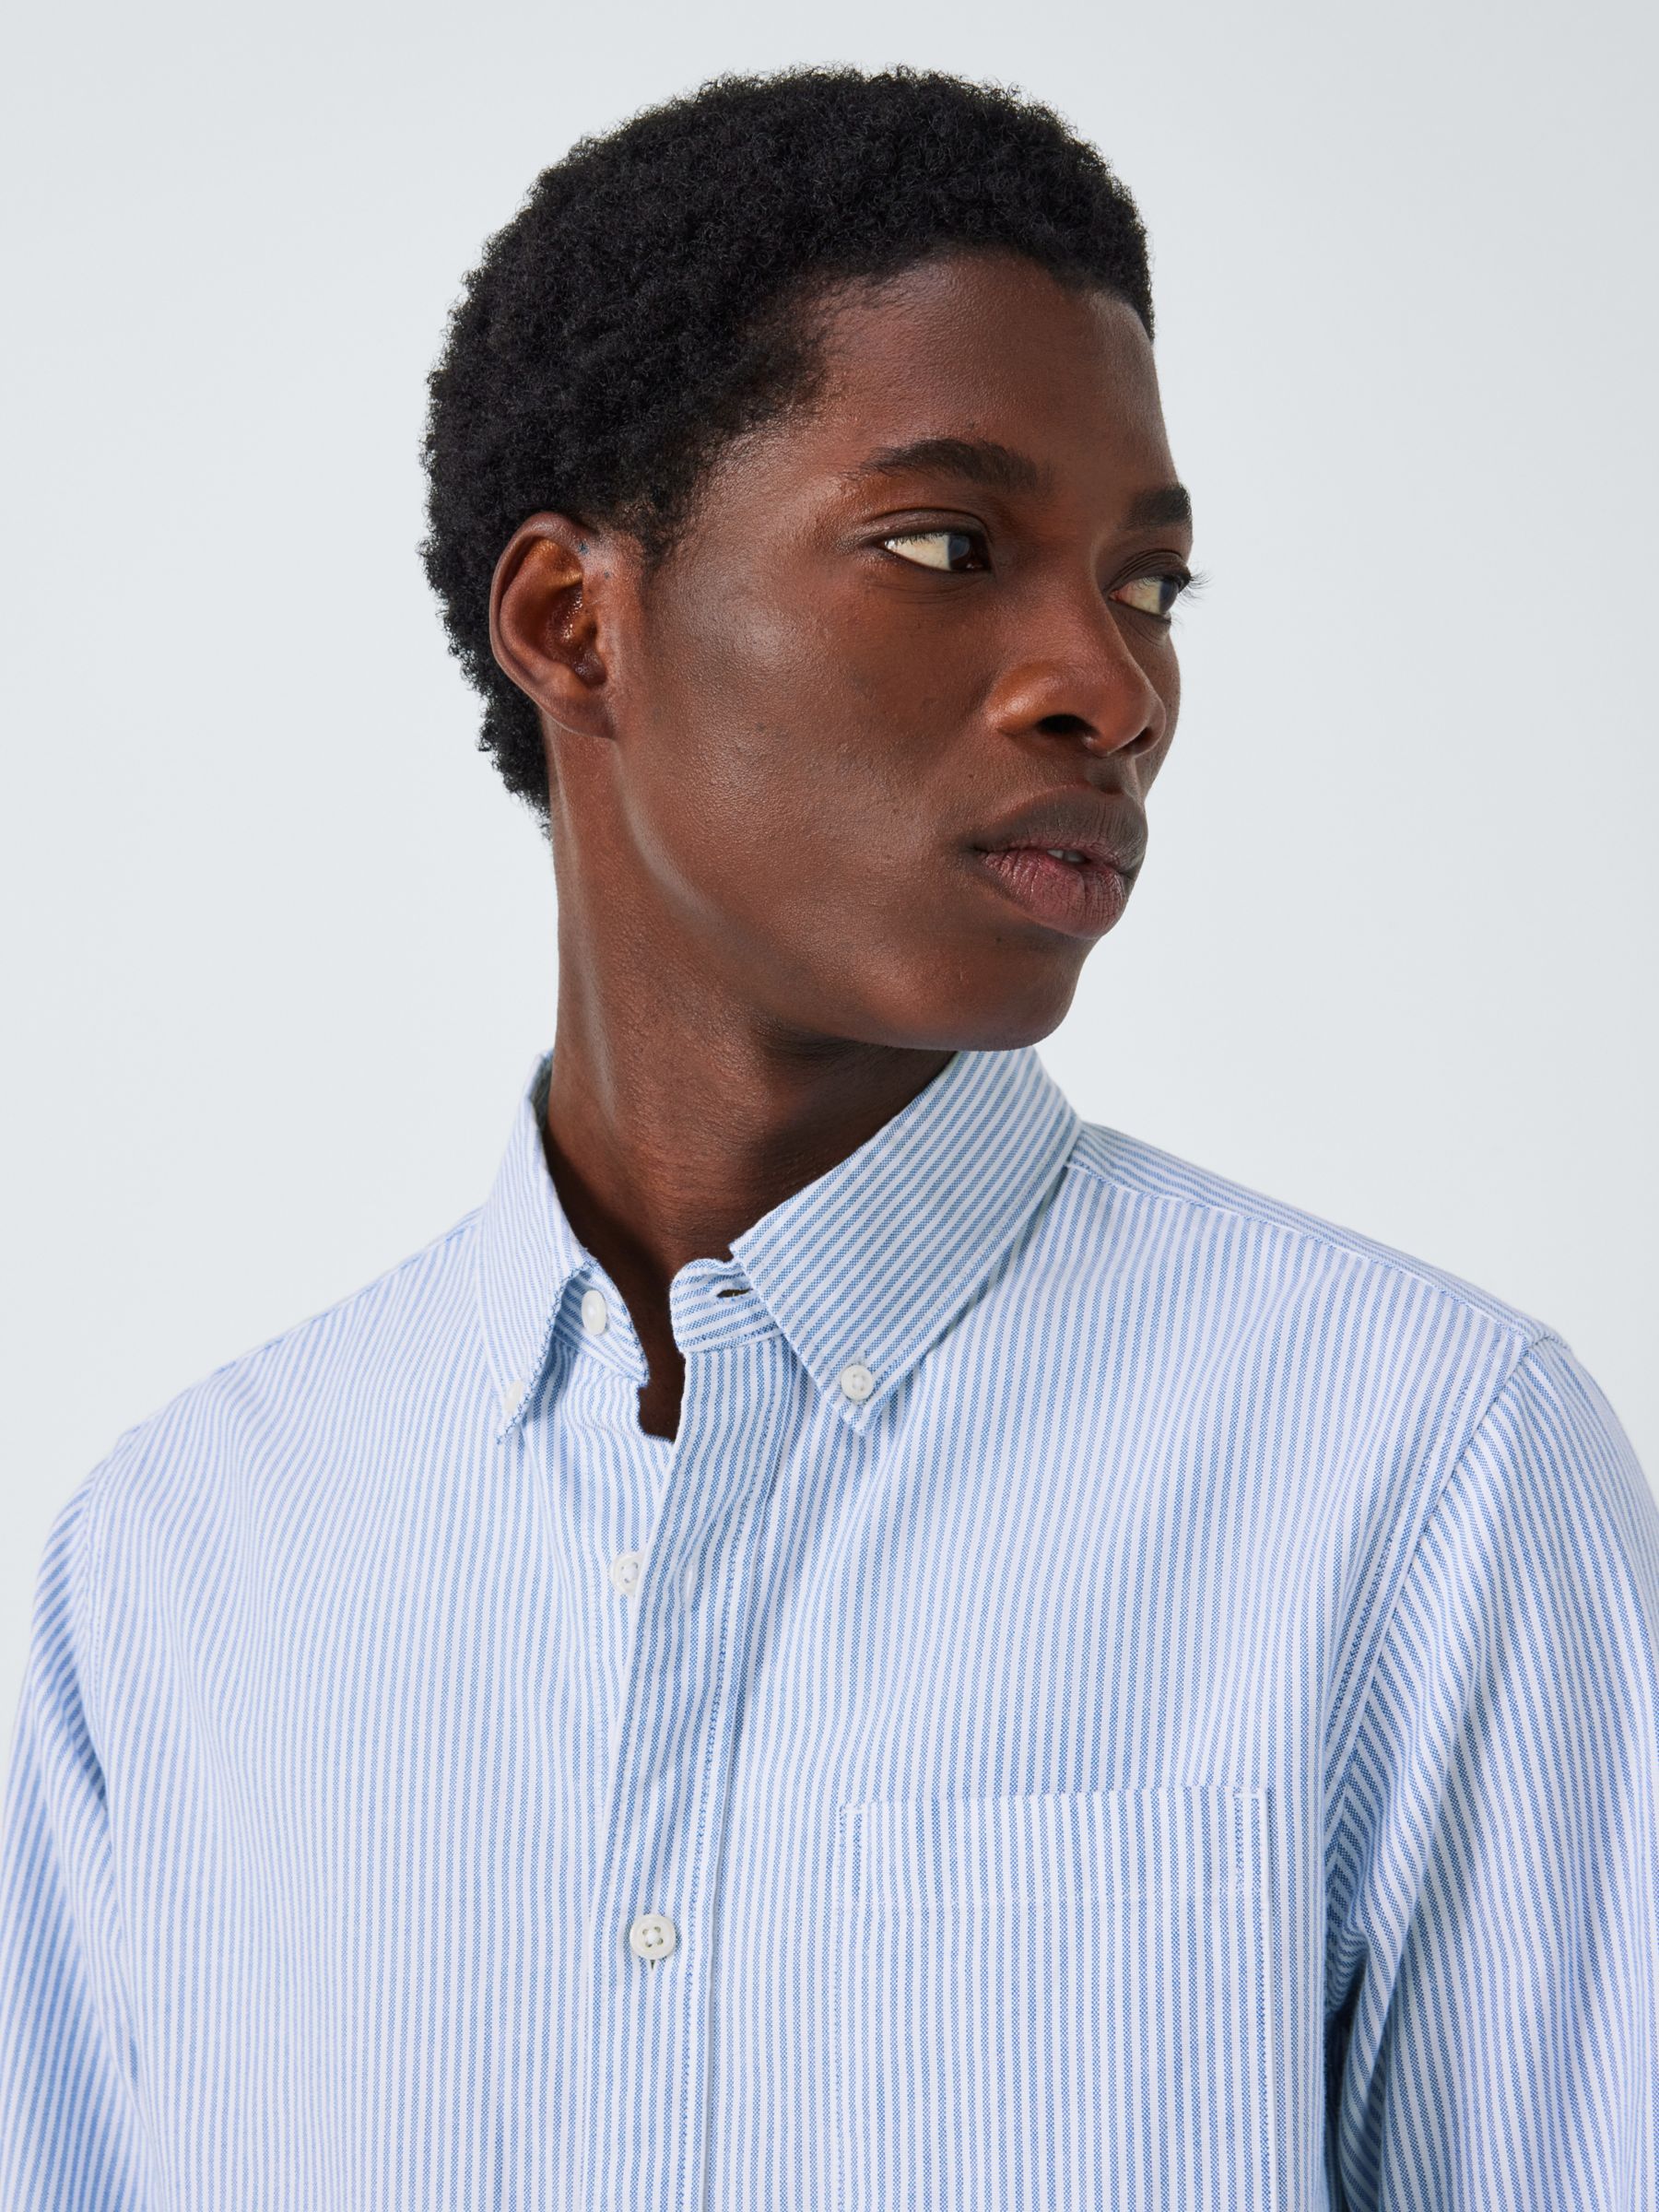 John Lewis Slim Fit Stripe Oxford Shirt, Blue, S